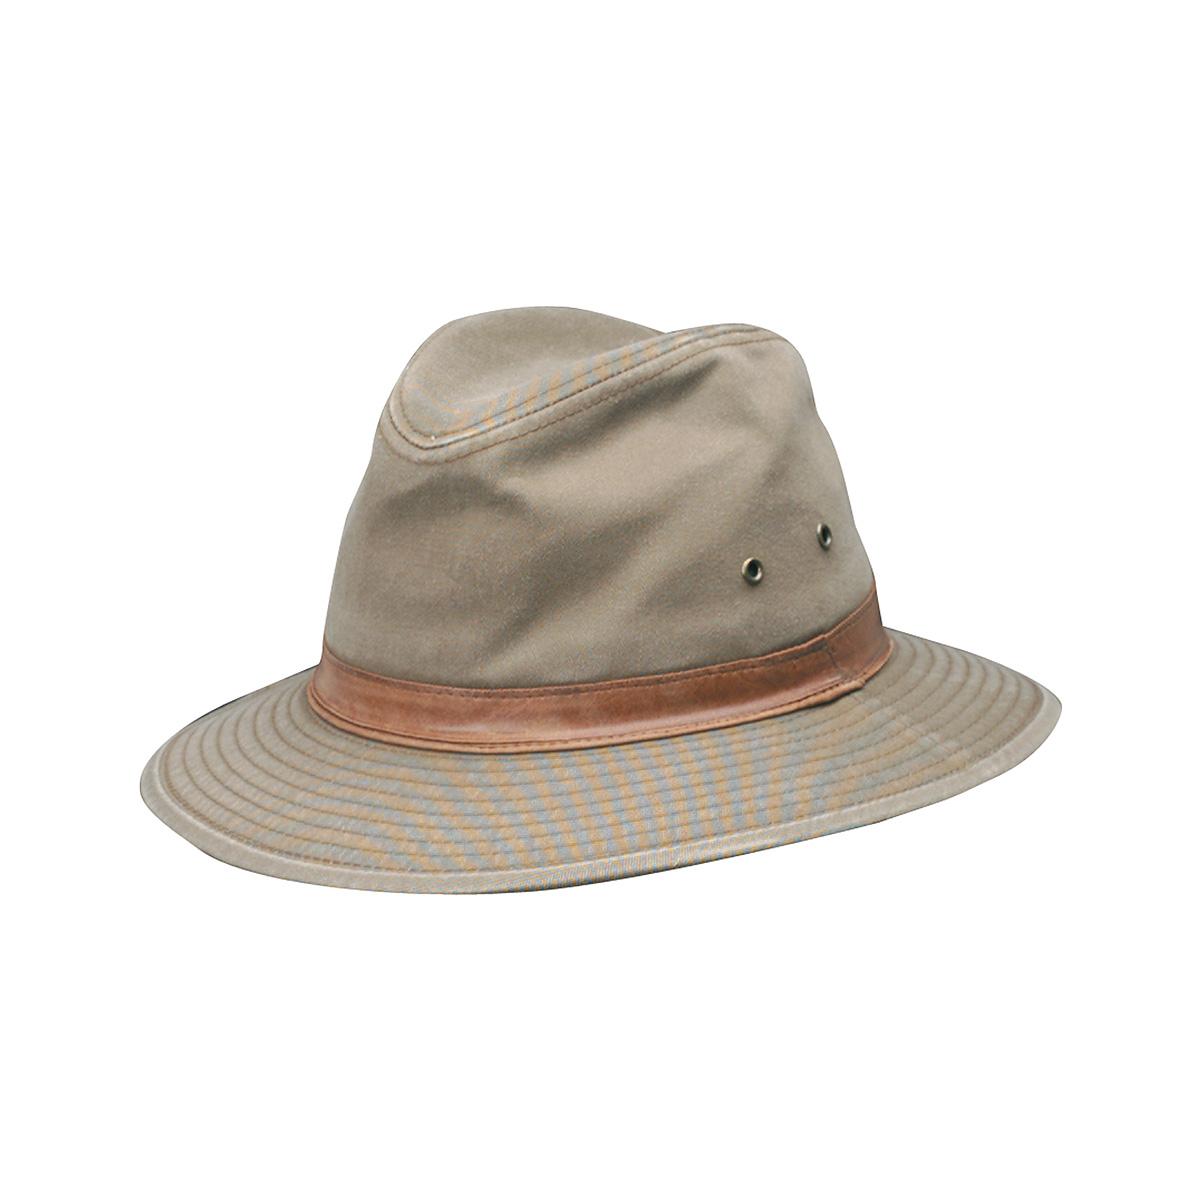 Dorfman Pacific Co. Men's Mesh Safari Hat, Fossil, Medium : :  Clothing, Shoes & Accessories